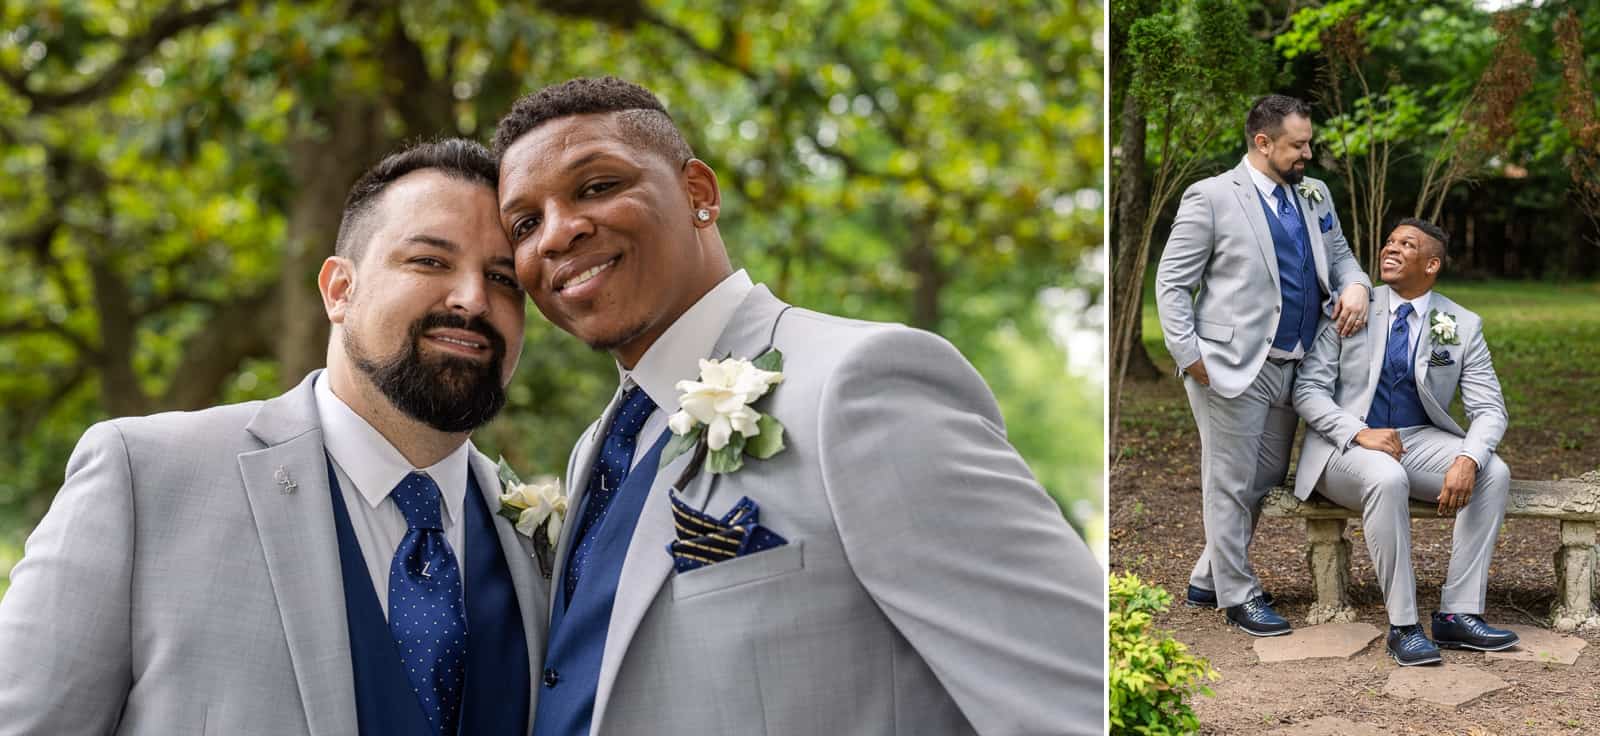 Male same-sex couple portraits